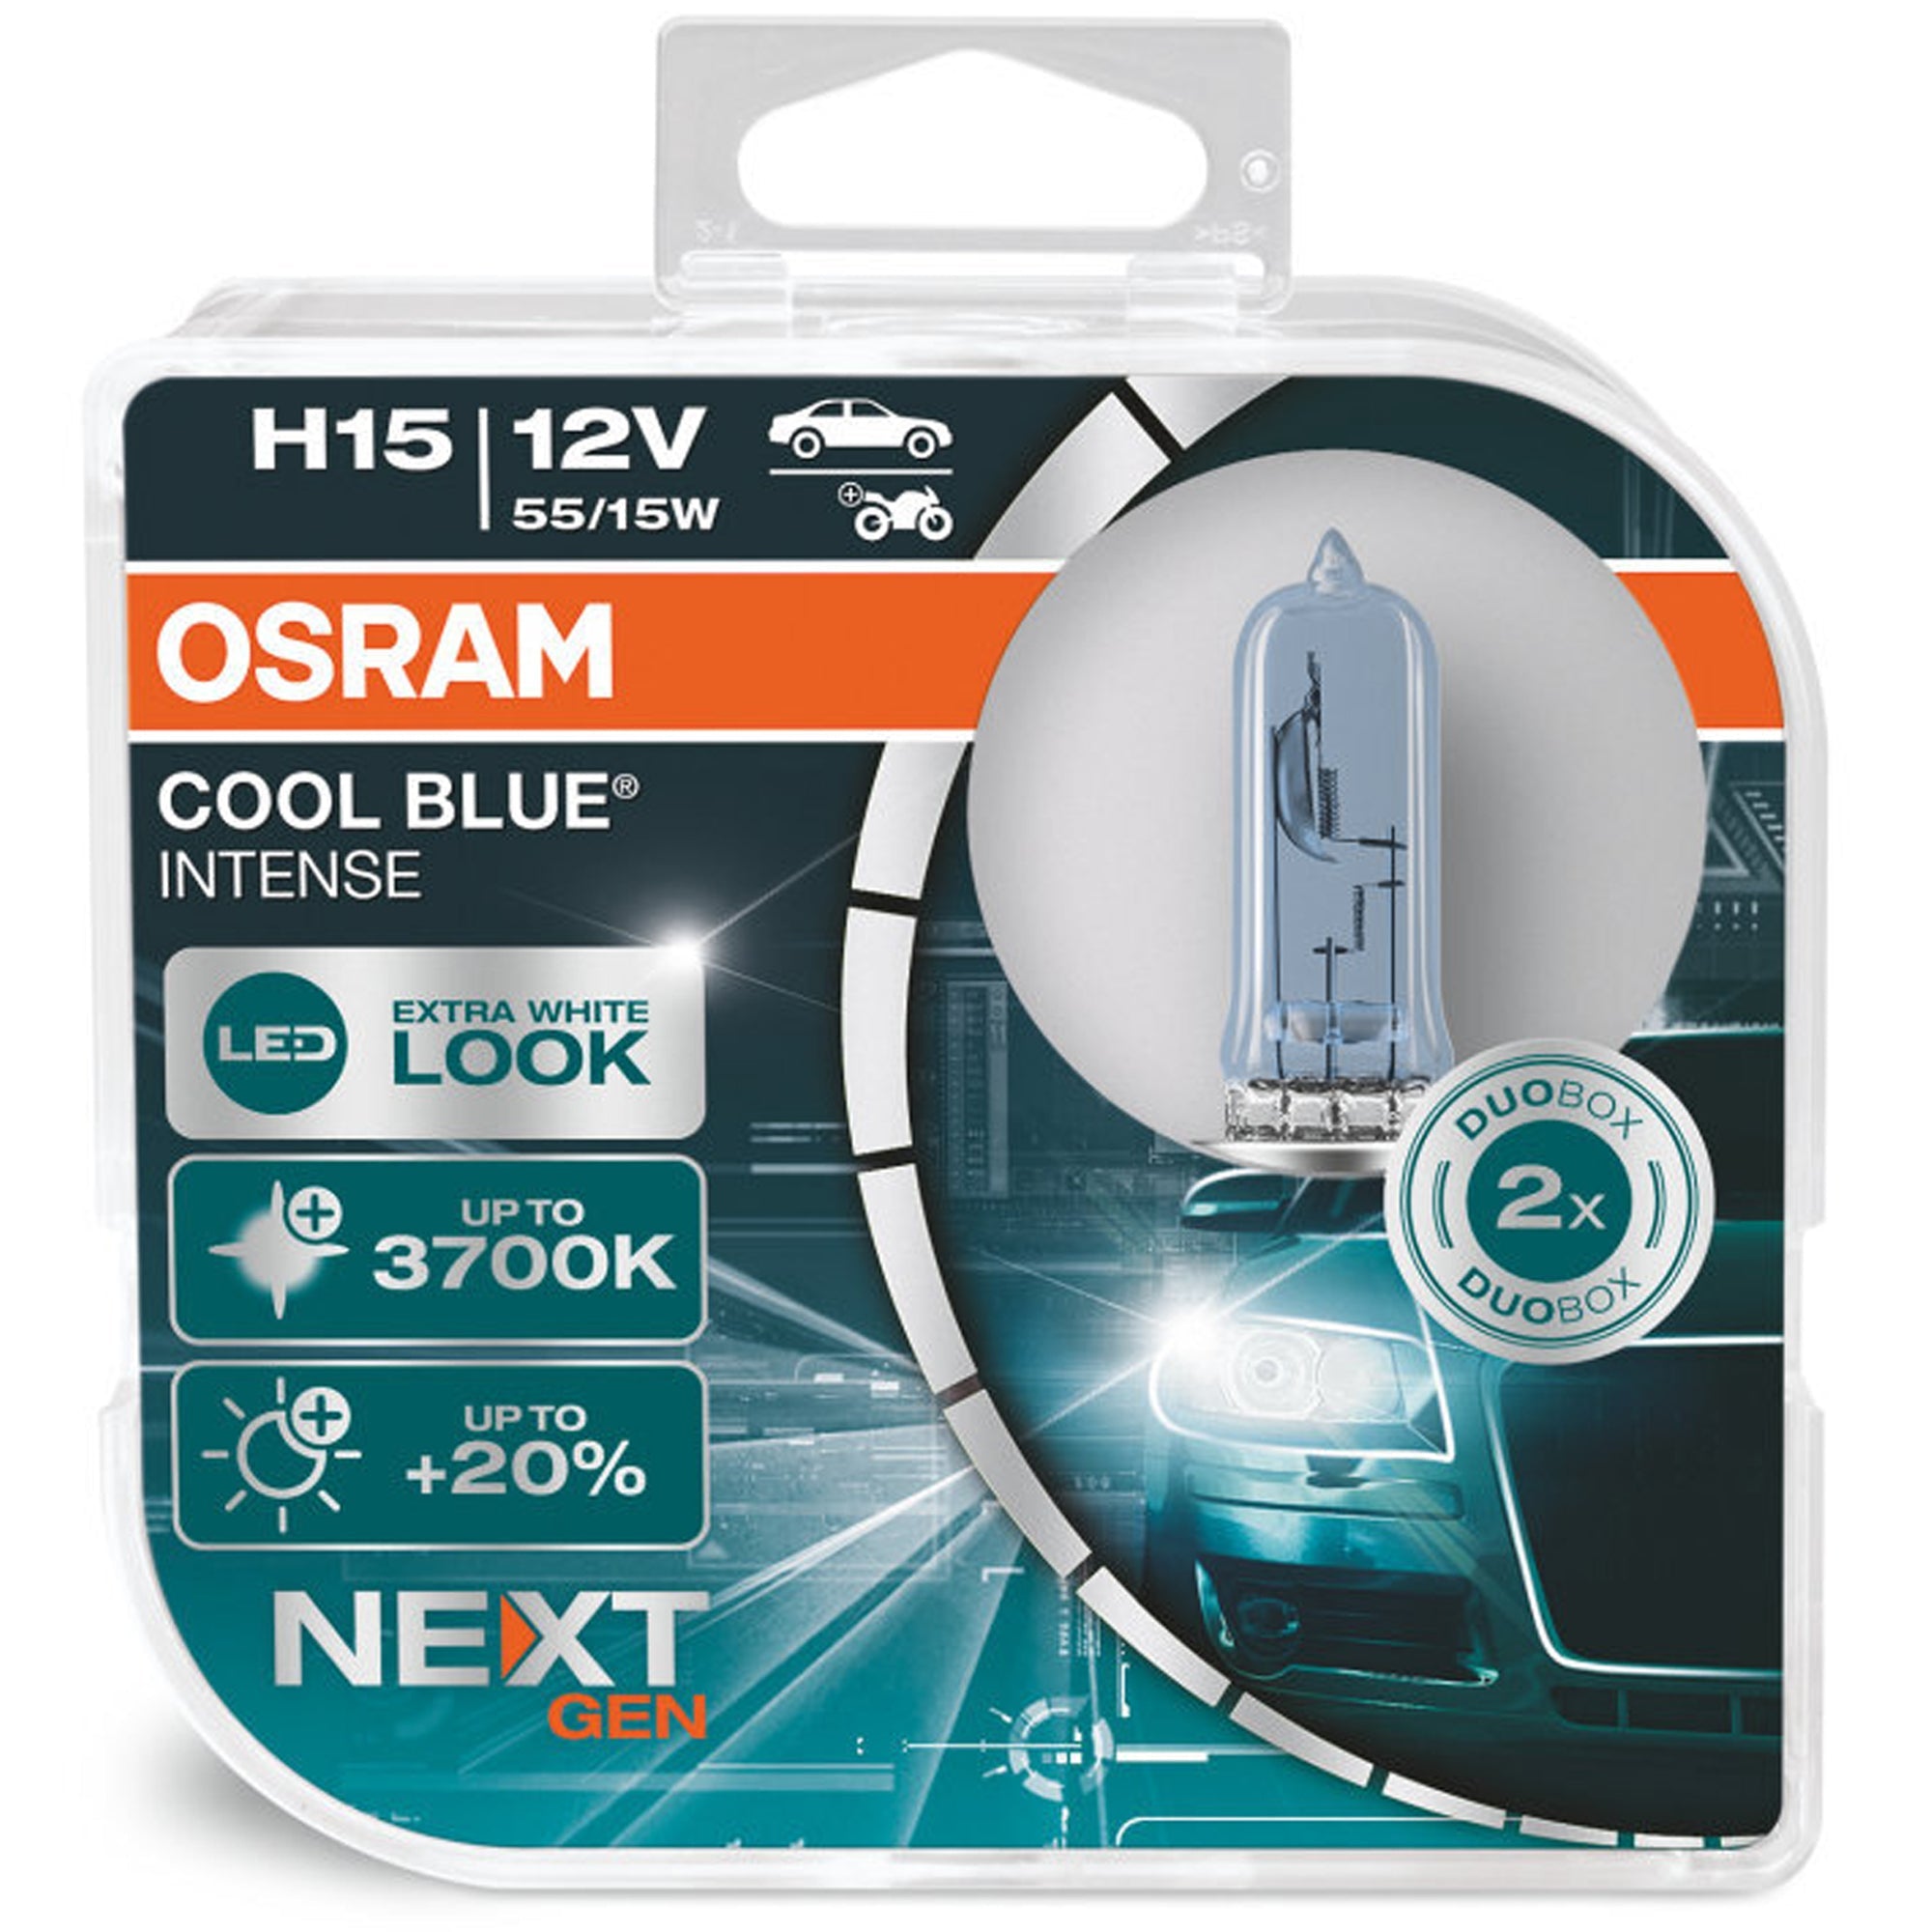 Osram H15 12V 55/15W Cool Blue Intense (Twin Pack)